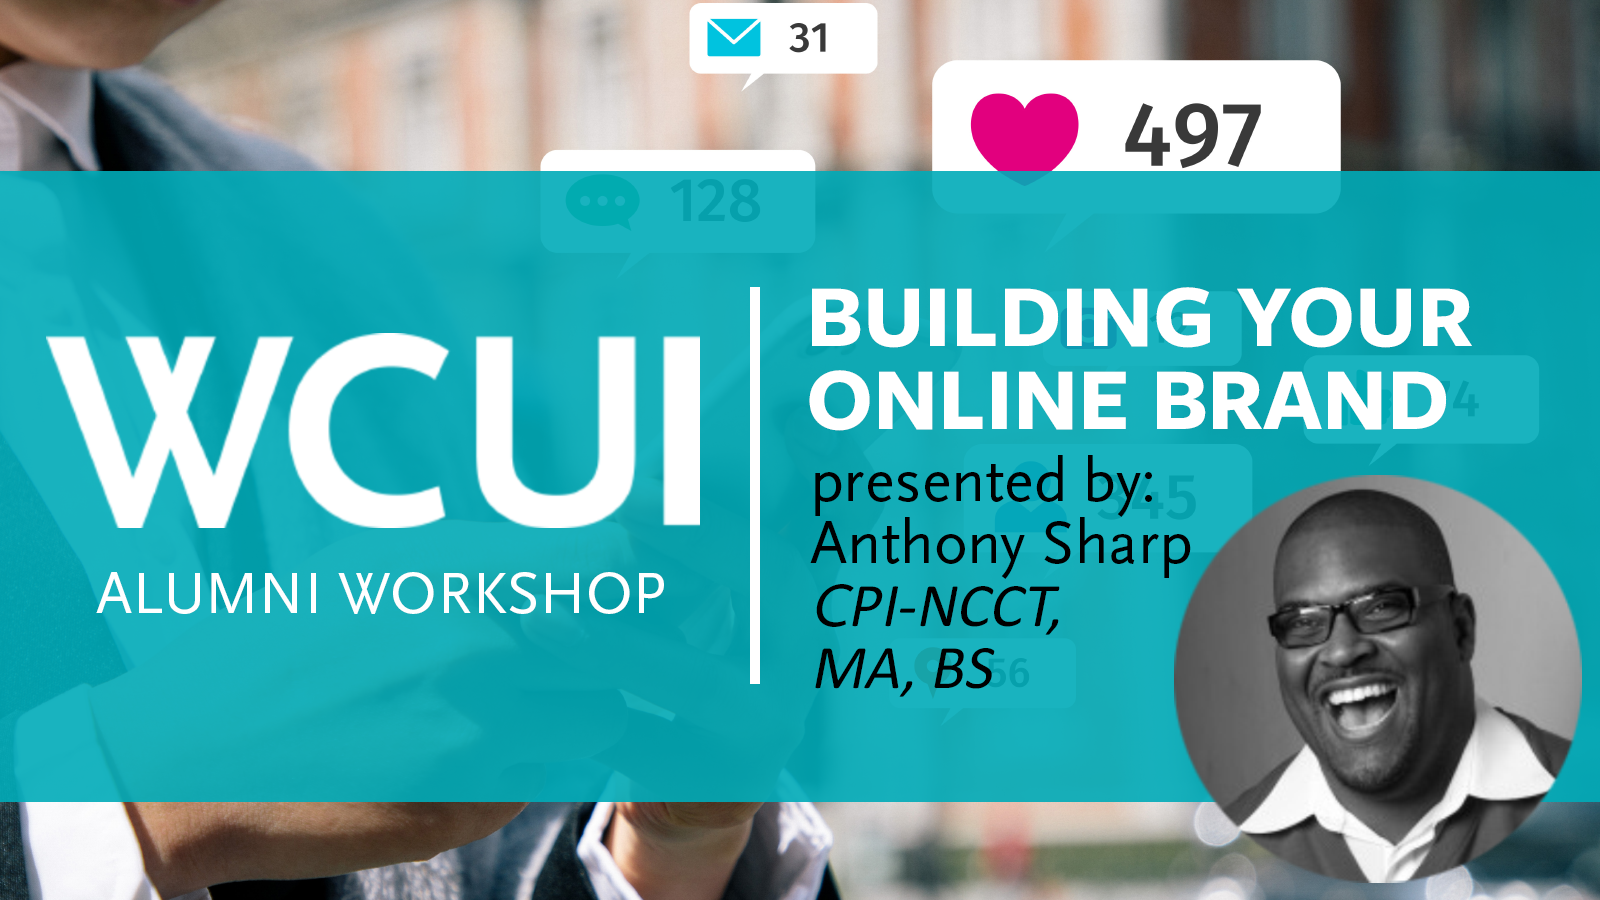 Alumni Workshop - Building Your Online Brand